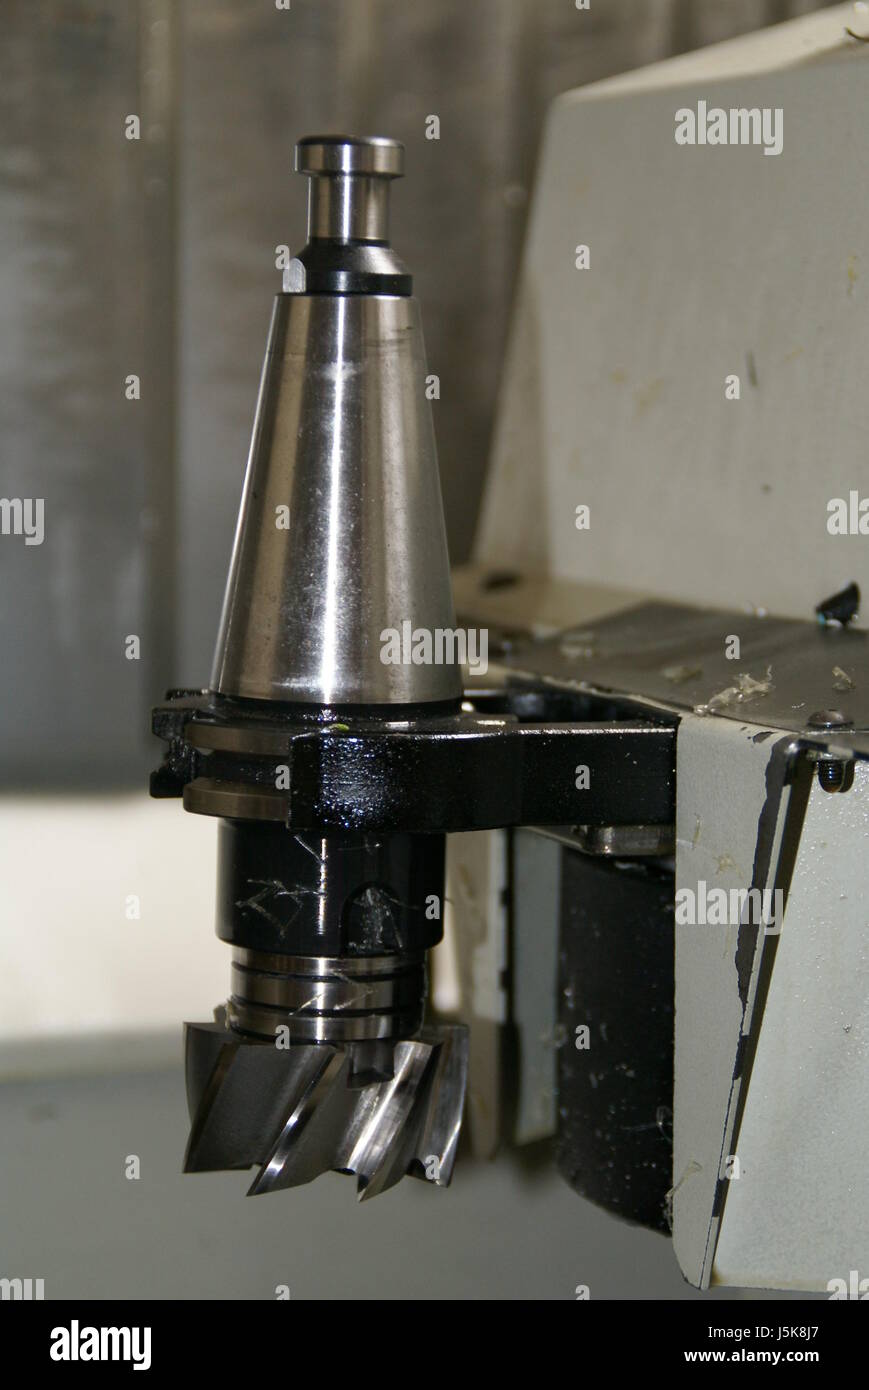 metalworking recording milling 607 metallverarbeitung frser walzenstirnfrser Stock Photo